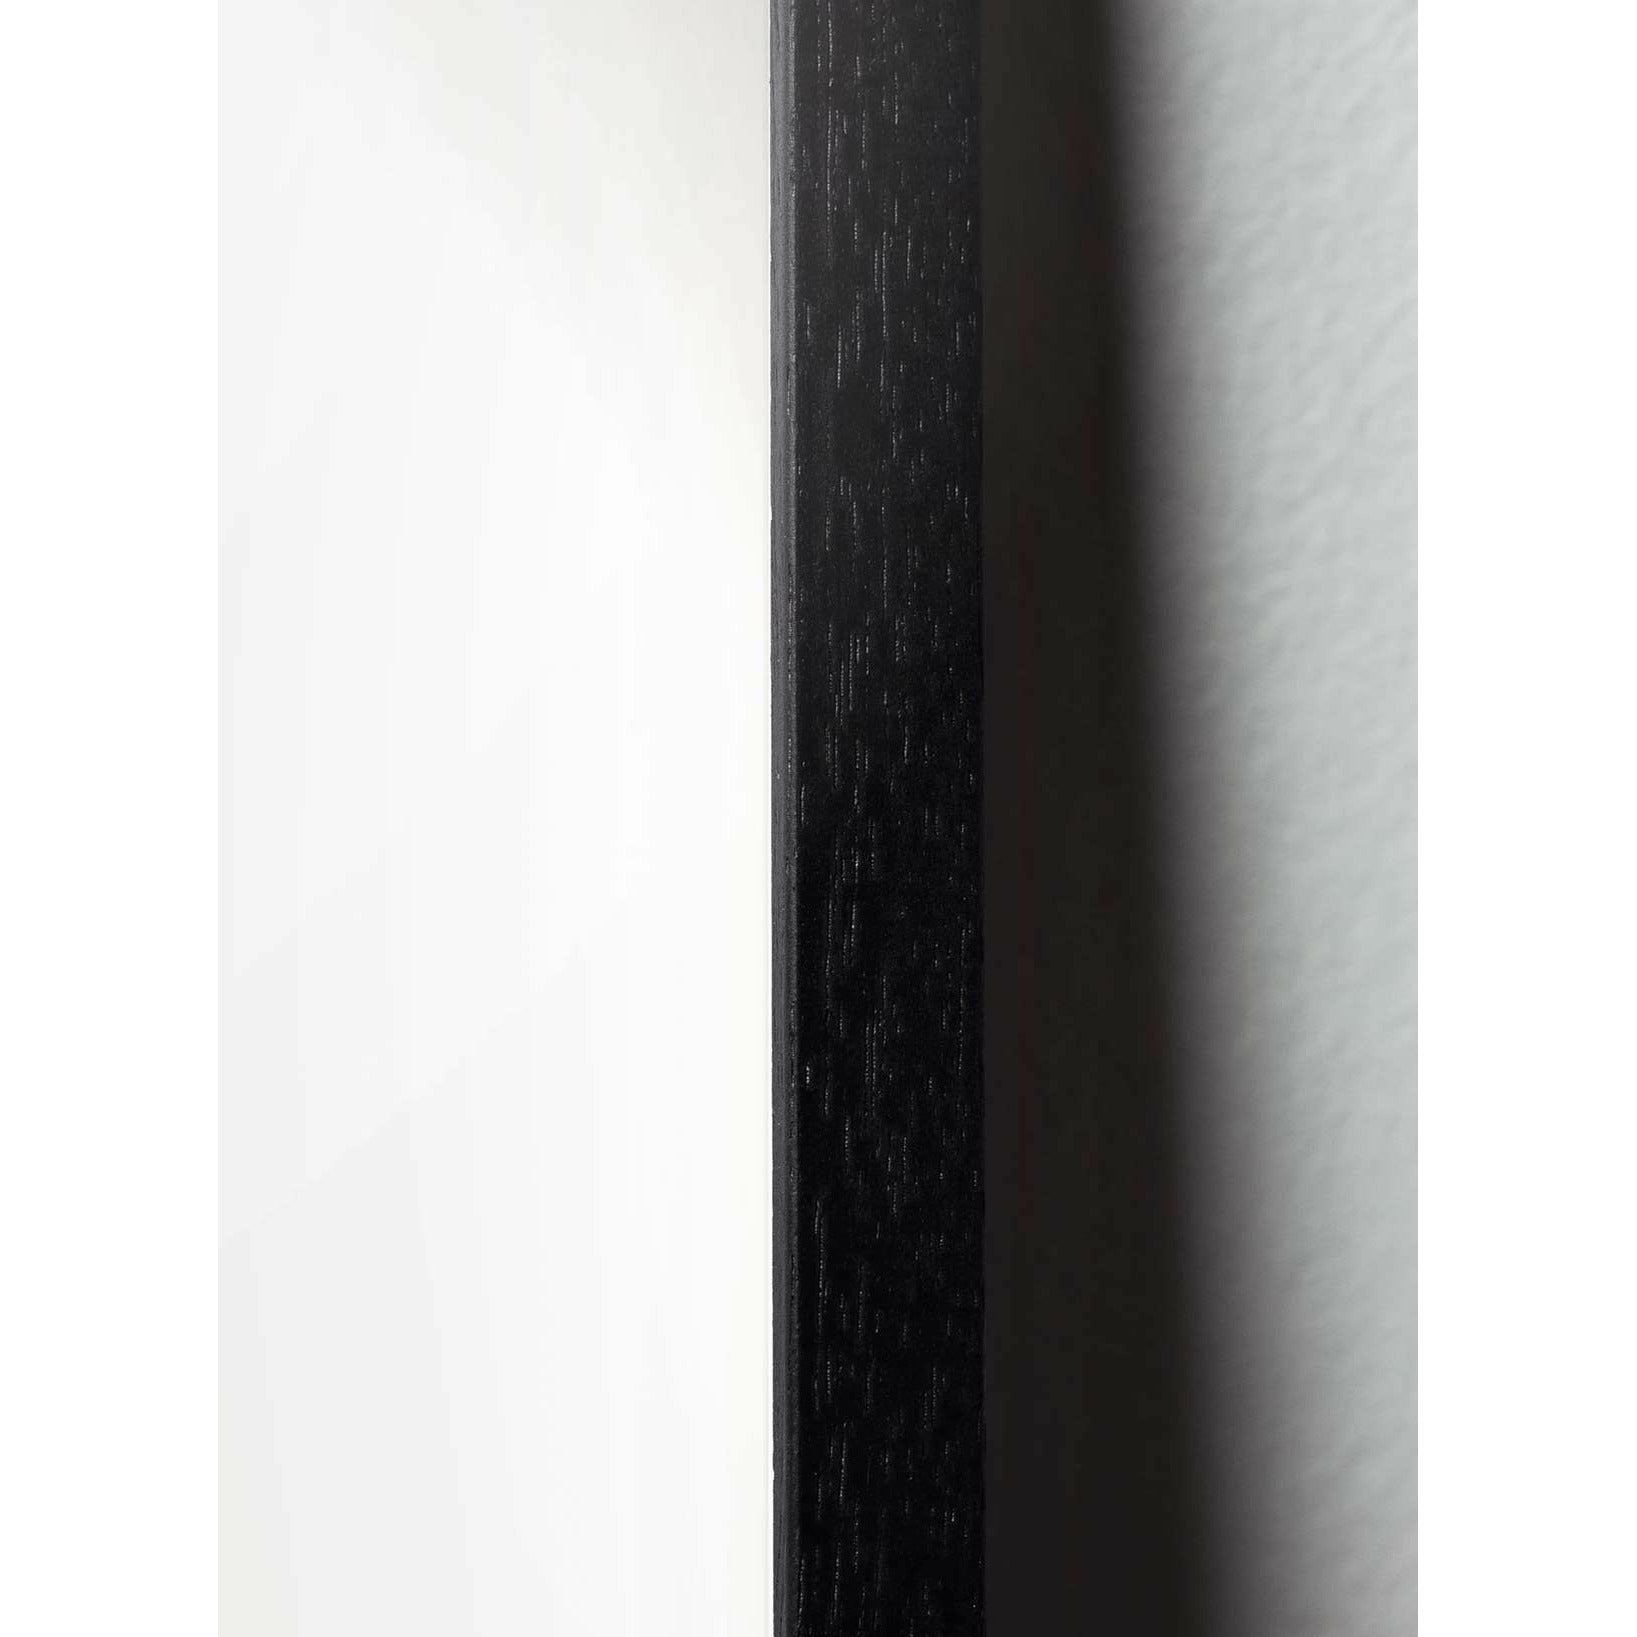 Brainchild Egg Cross Format Poster, Rahmen aus schwarz lackiertem Holz A5, schwarz